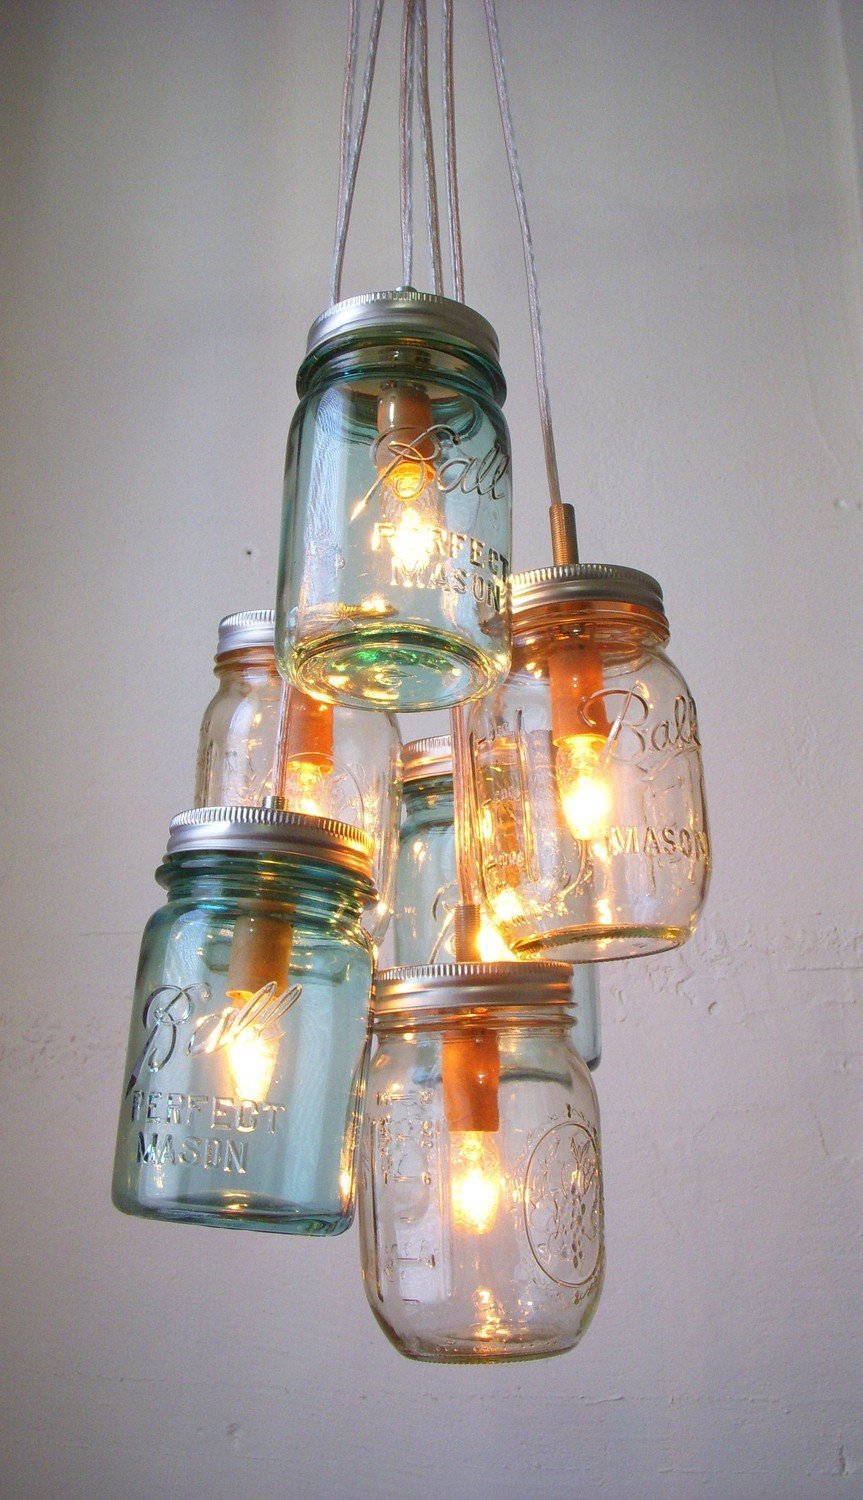 Best ideas about Mason Jar Lighting
. Save or Pin Sapphire Ocean Mason Jar Chandelier Mason Jar Light Modern Now.